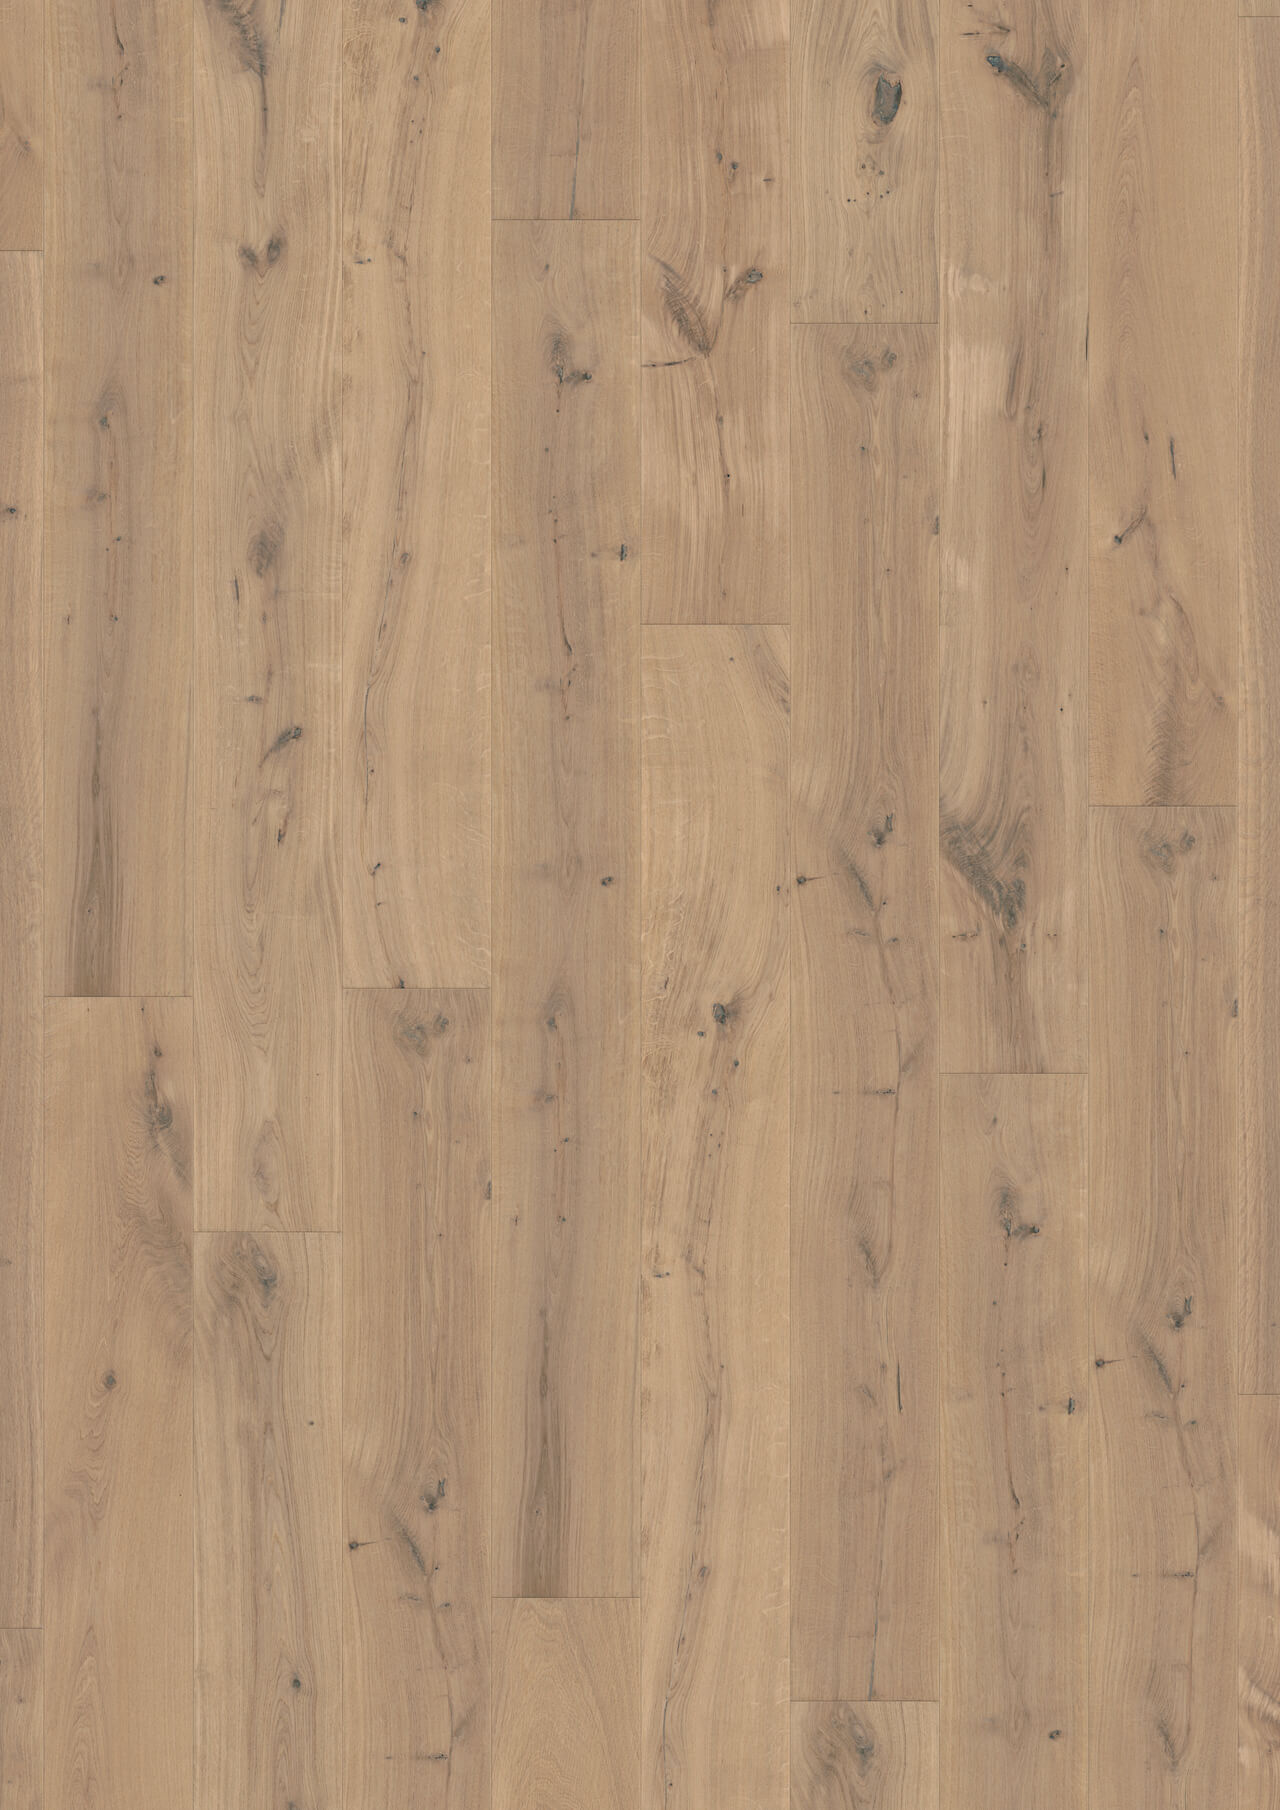 Premium Floors Quick-Step Massimo Engineered Timber Cappuccino Blonde Oak Extra Matt